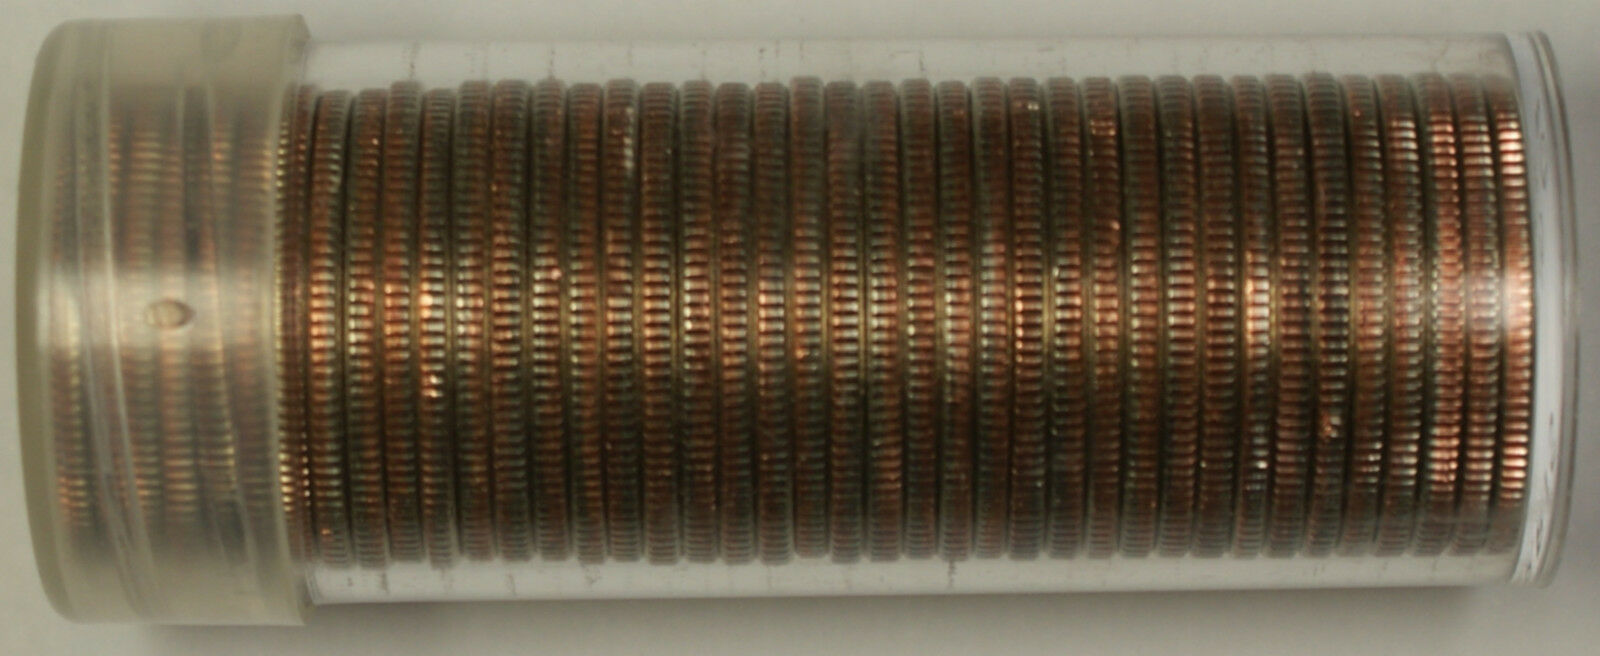 2002 P Louisiana State Quarter BU Roll- 40 Coins